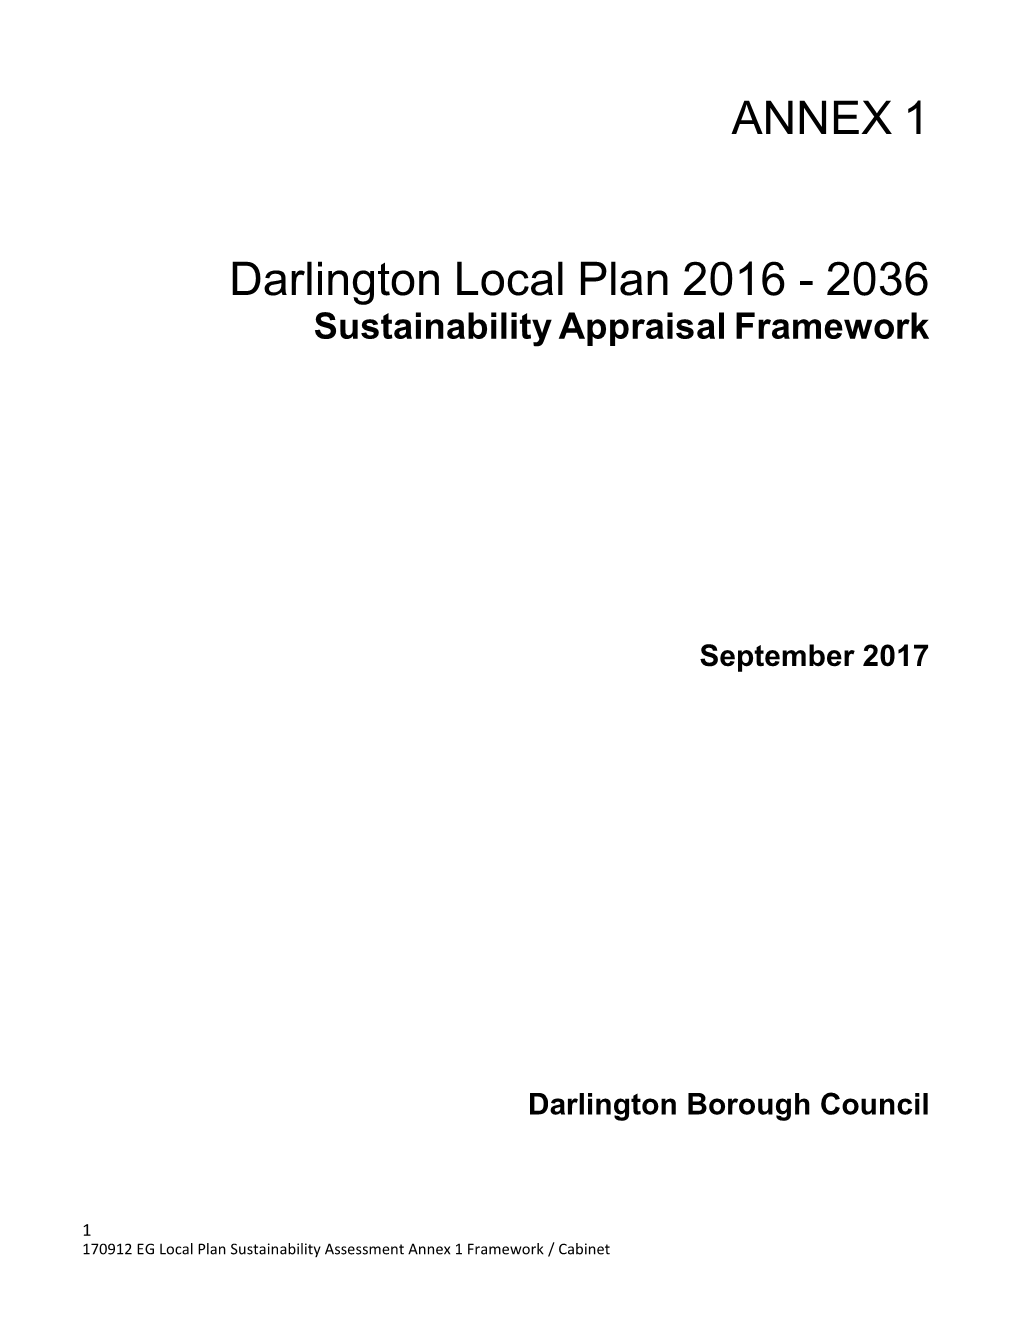 ANNEX 1 Darlington Local Plan 2016